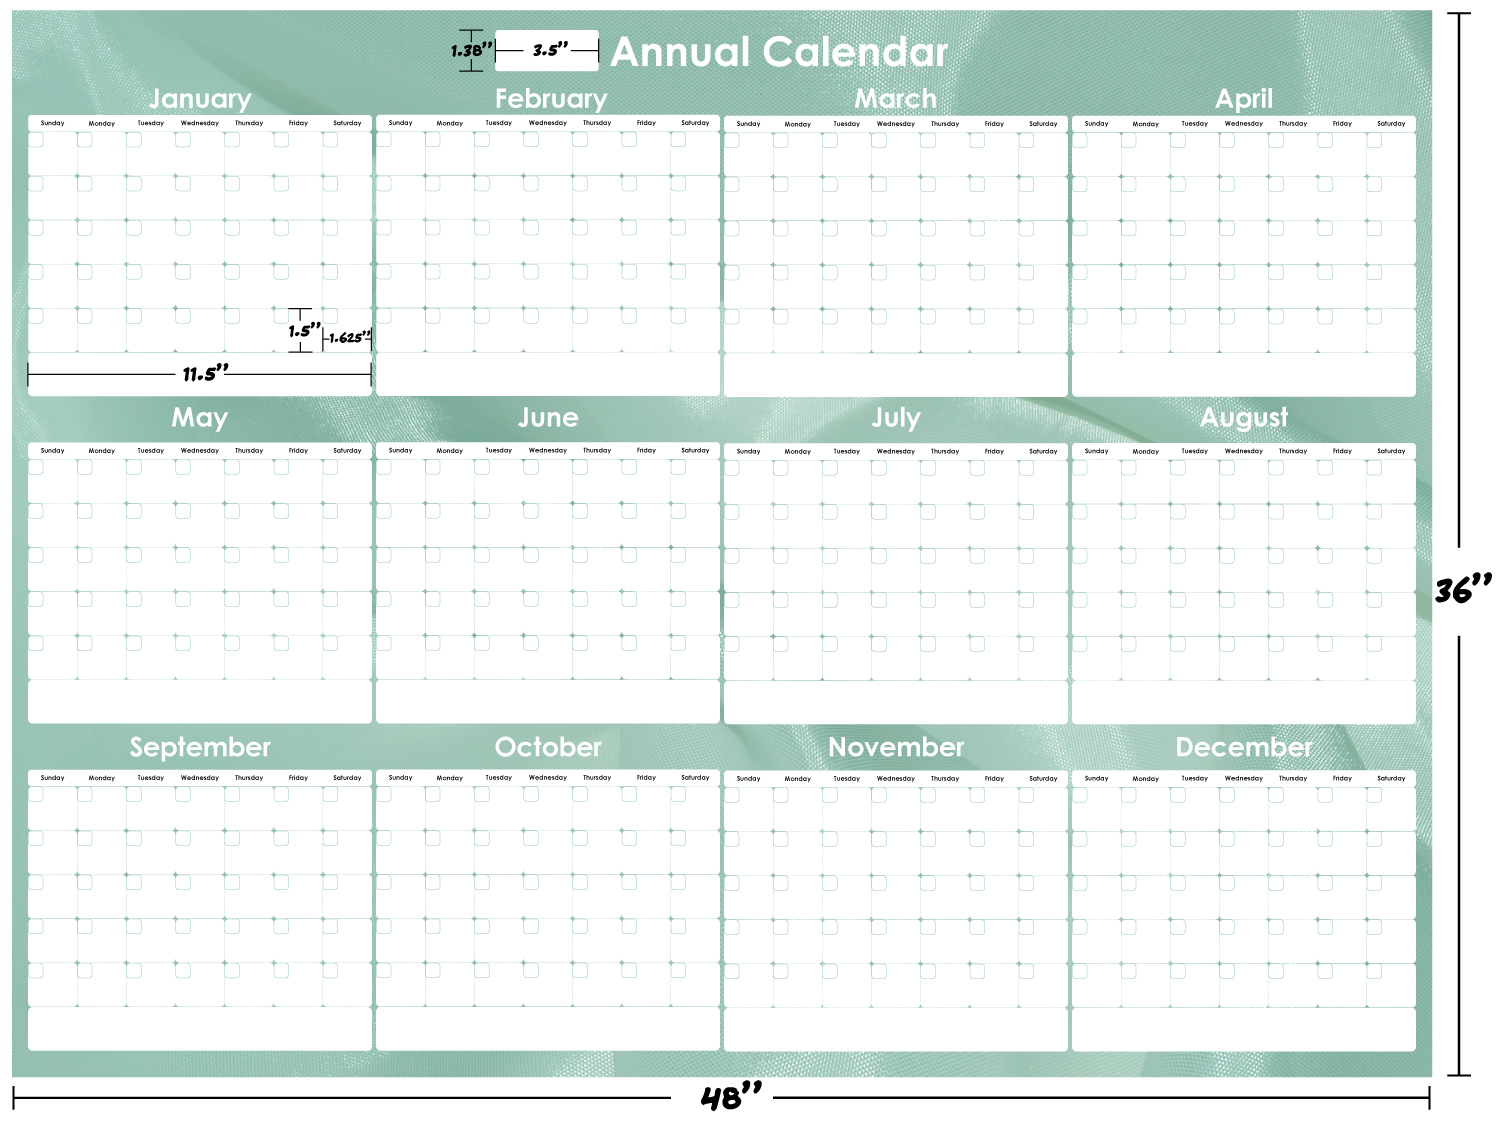 annual-calendar-measurements